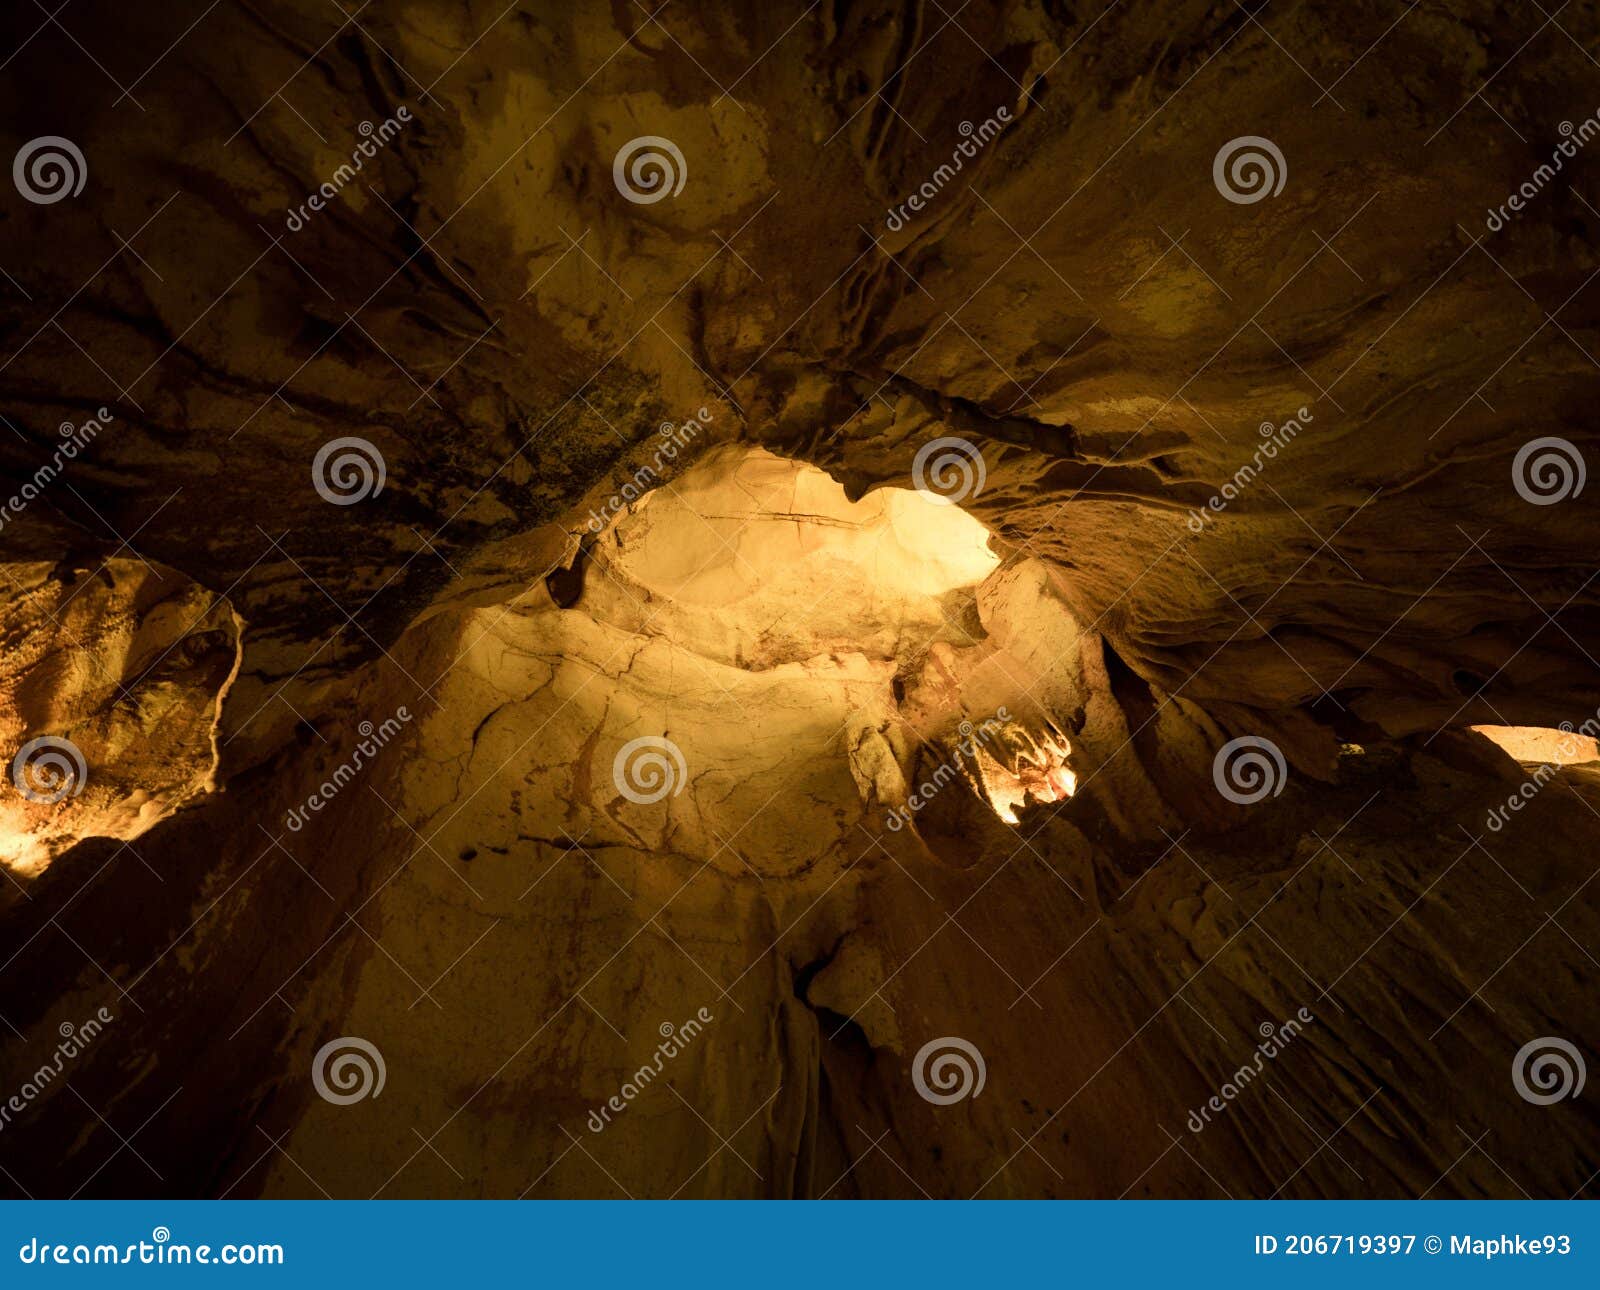 illuminated lit lights stalagmites stalactites limestone show cave cavern grutas da moeda in batalha leiria portugal